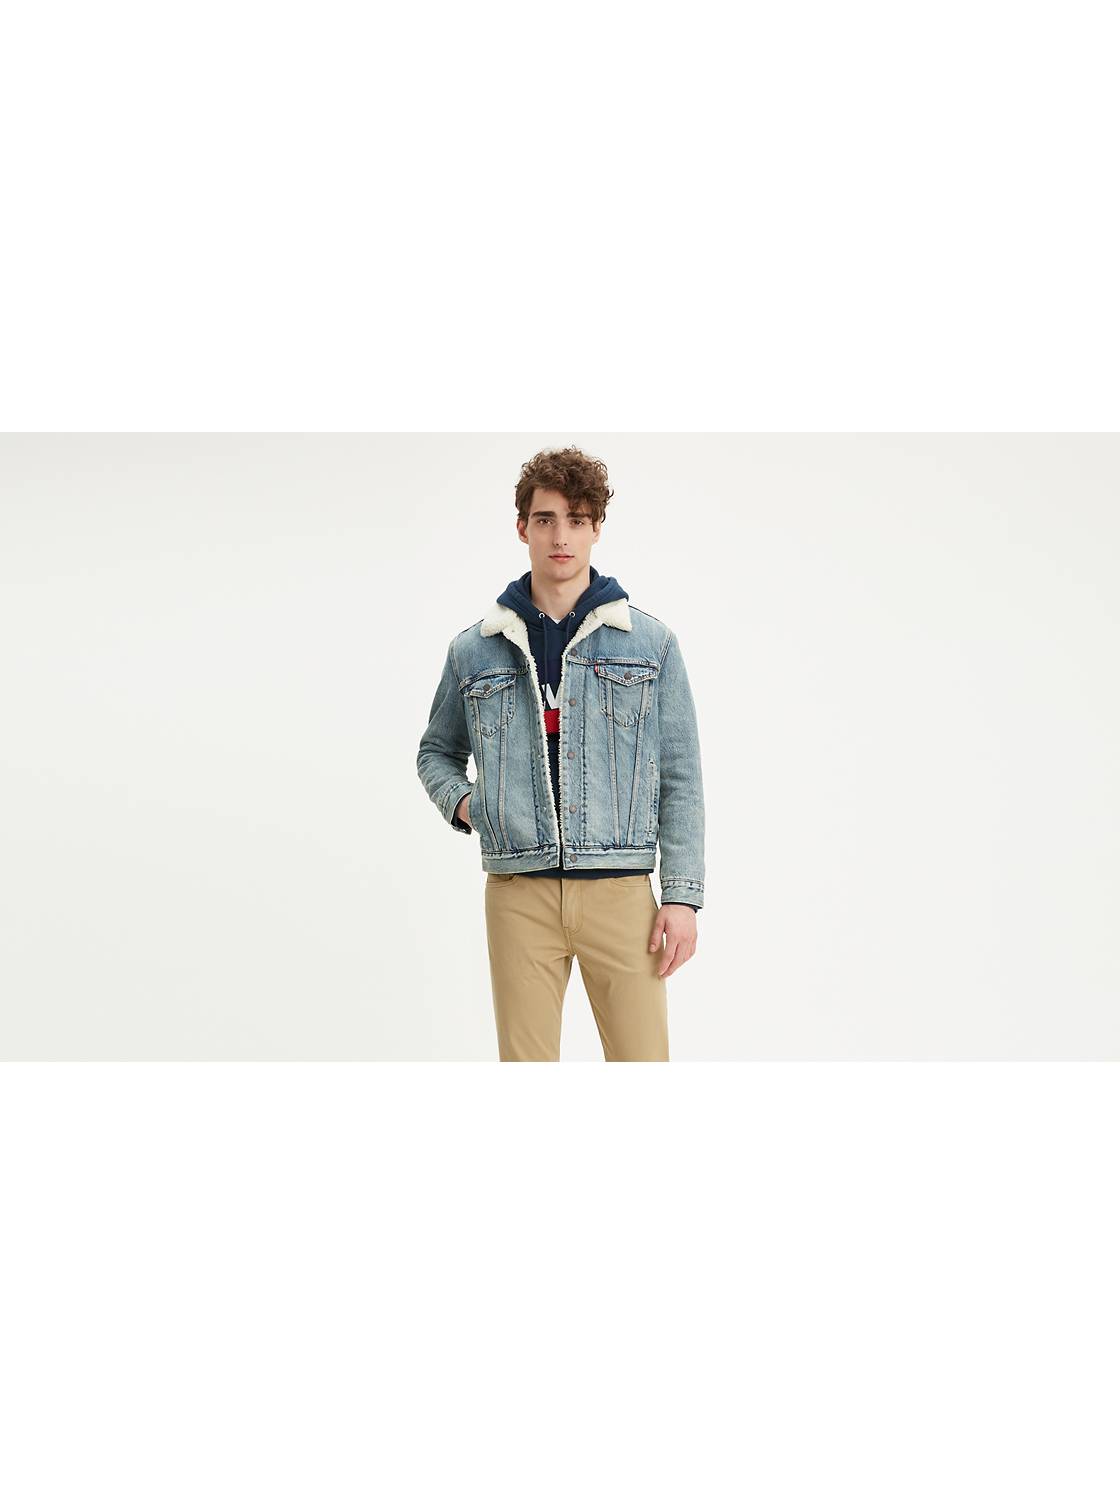 Men's Sherpa Jackets: Shop Sherpa Lined Jacket Styles | Levi’s® US